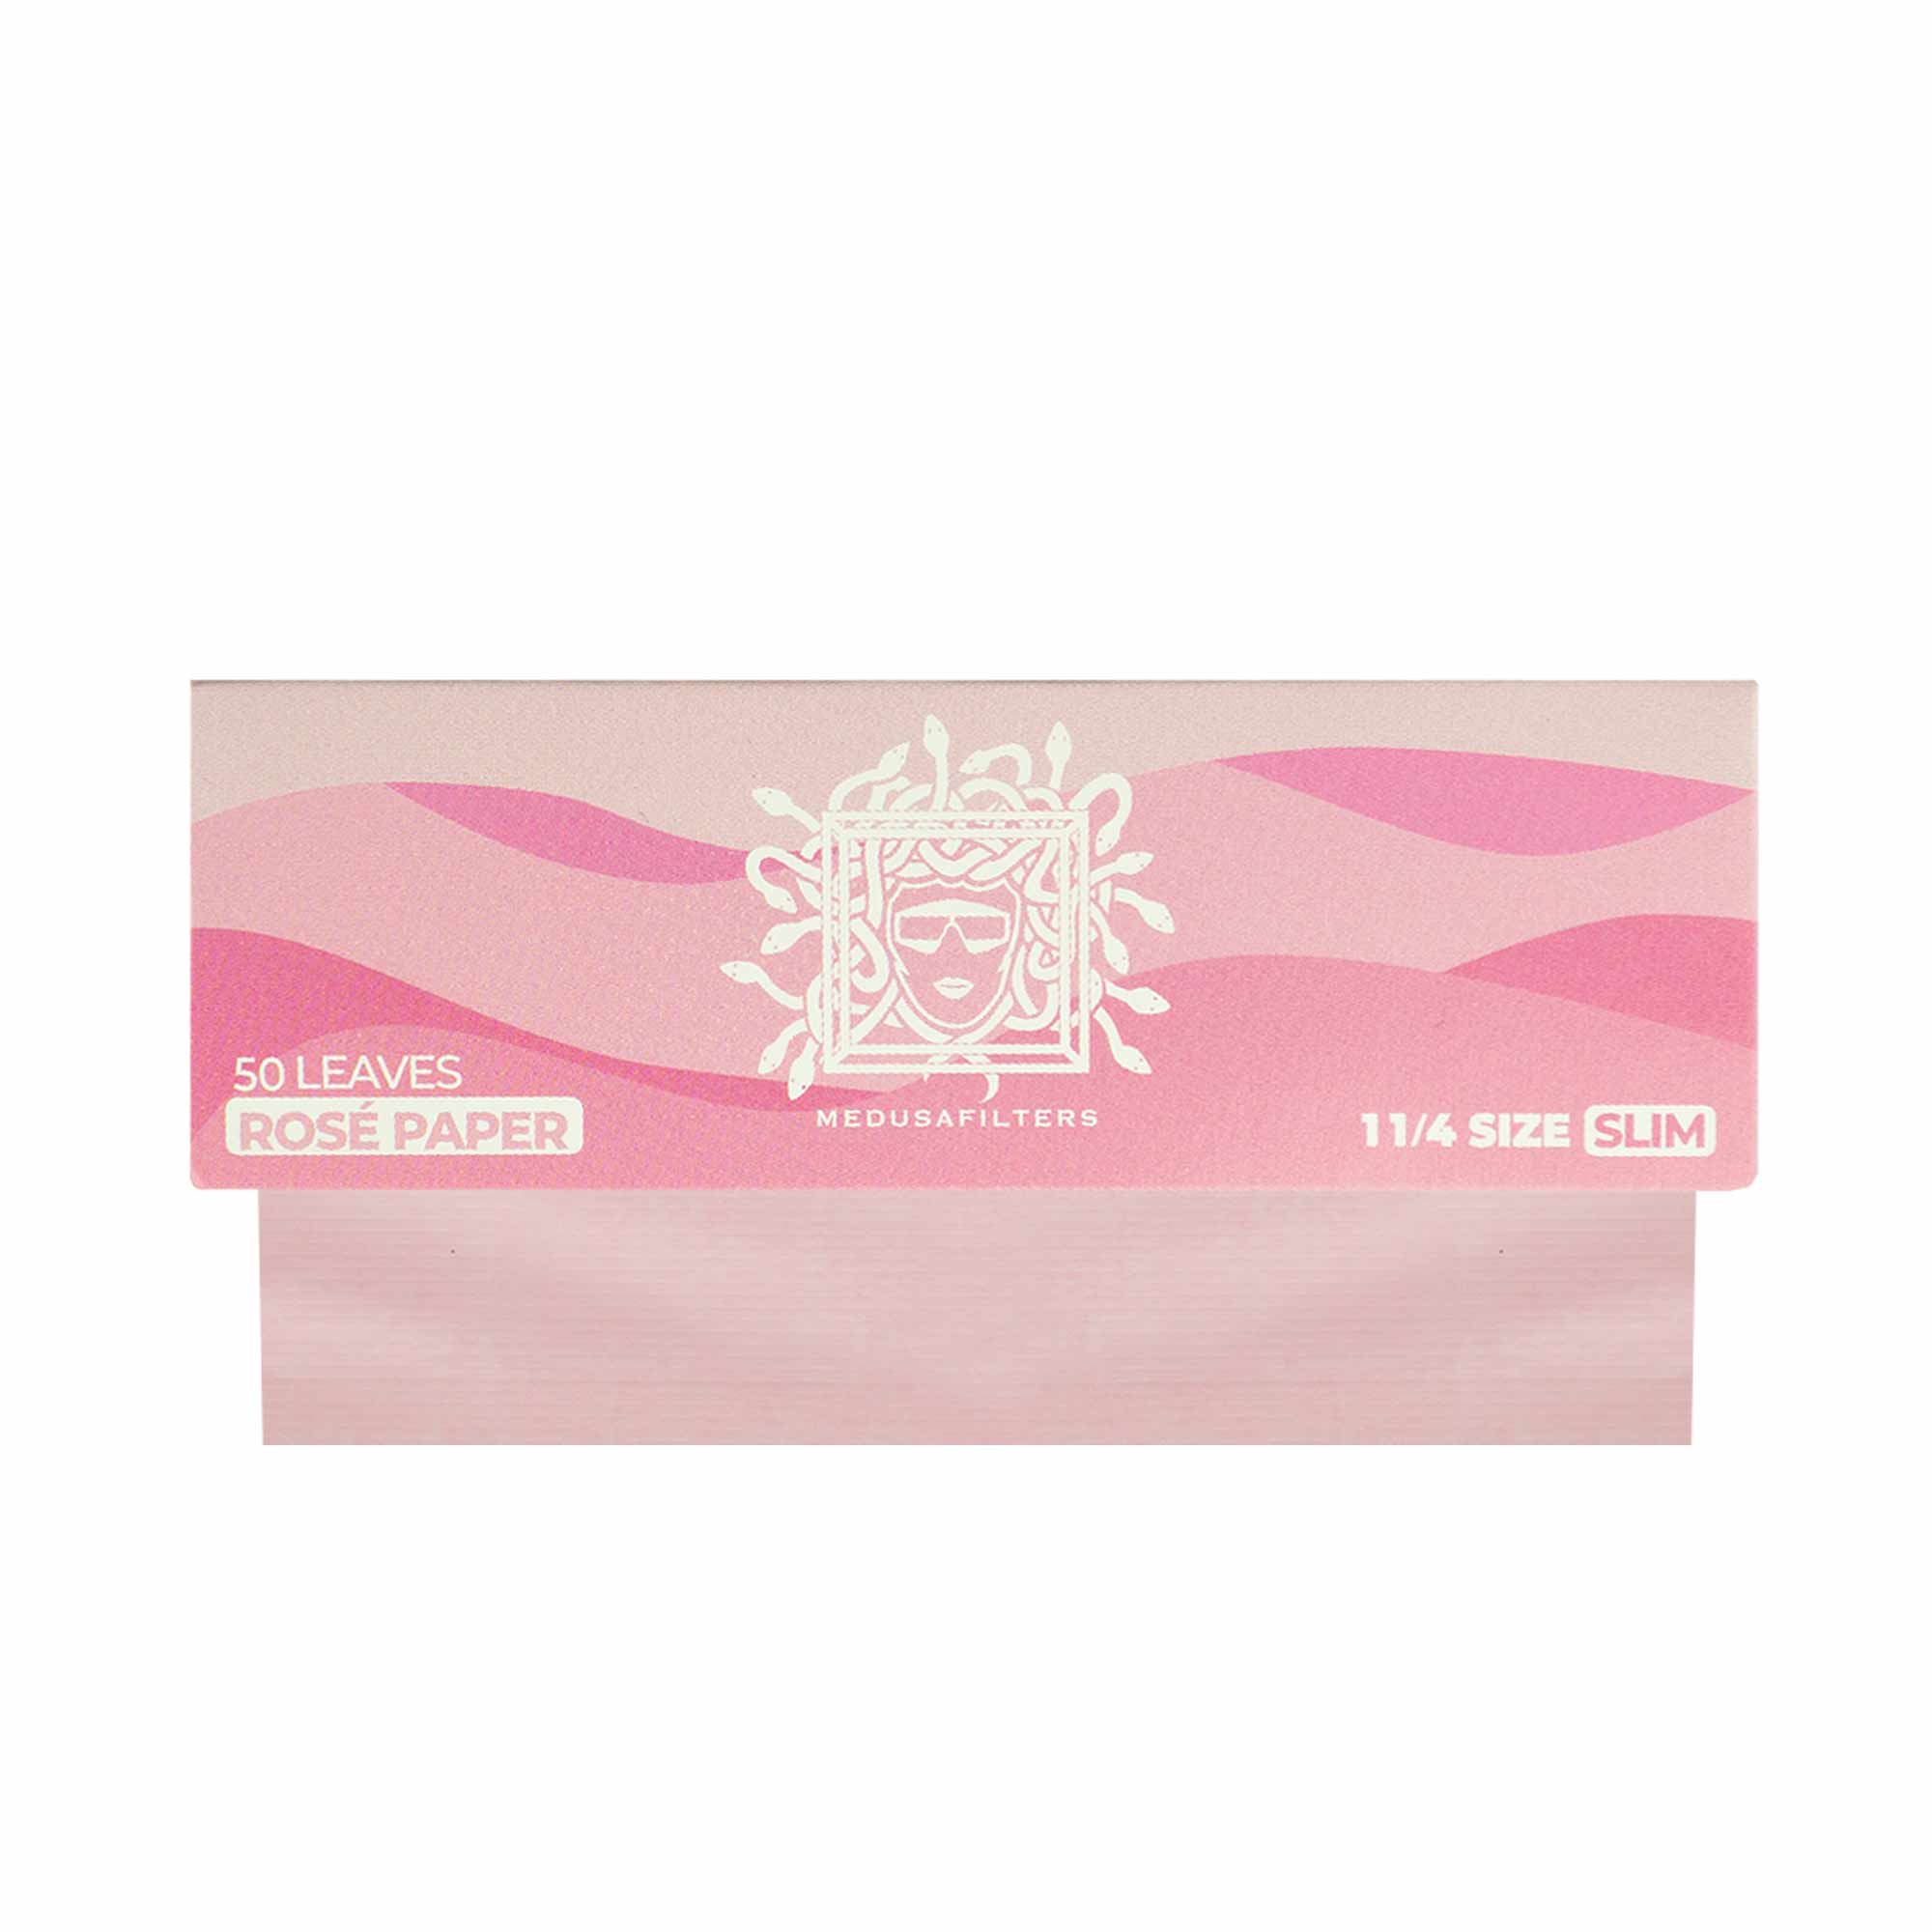 Medusafilters 1 1/4 Size Slim Papers Pink Rosa Zigarettenpapier Longpapers Pinkpapers